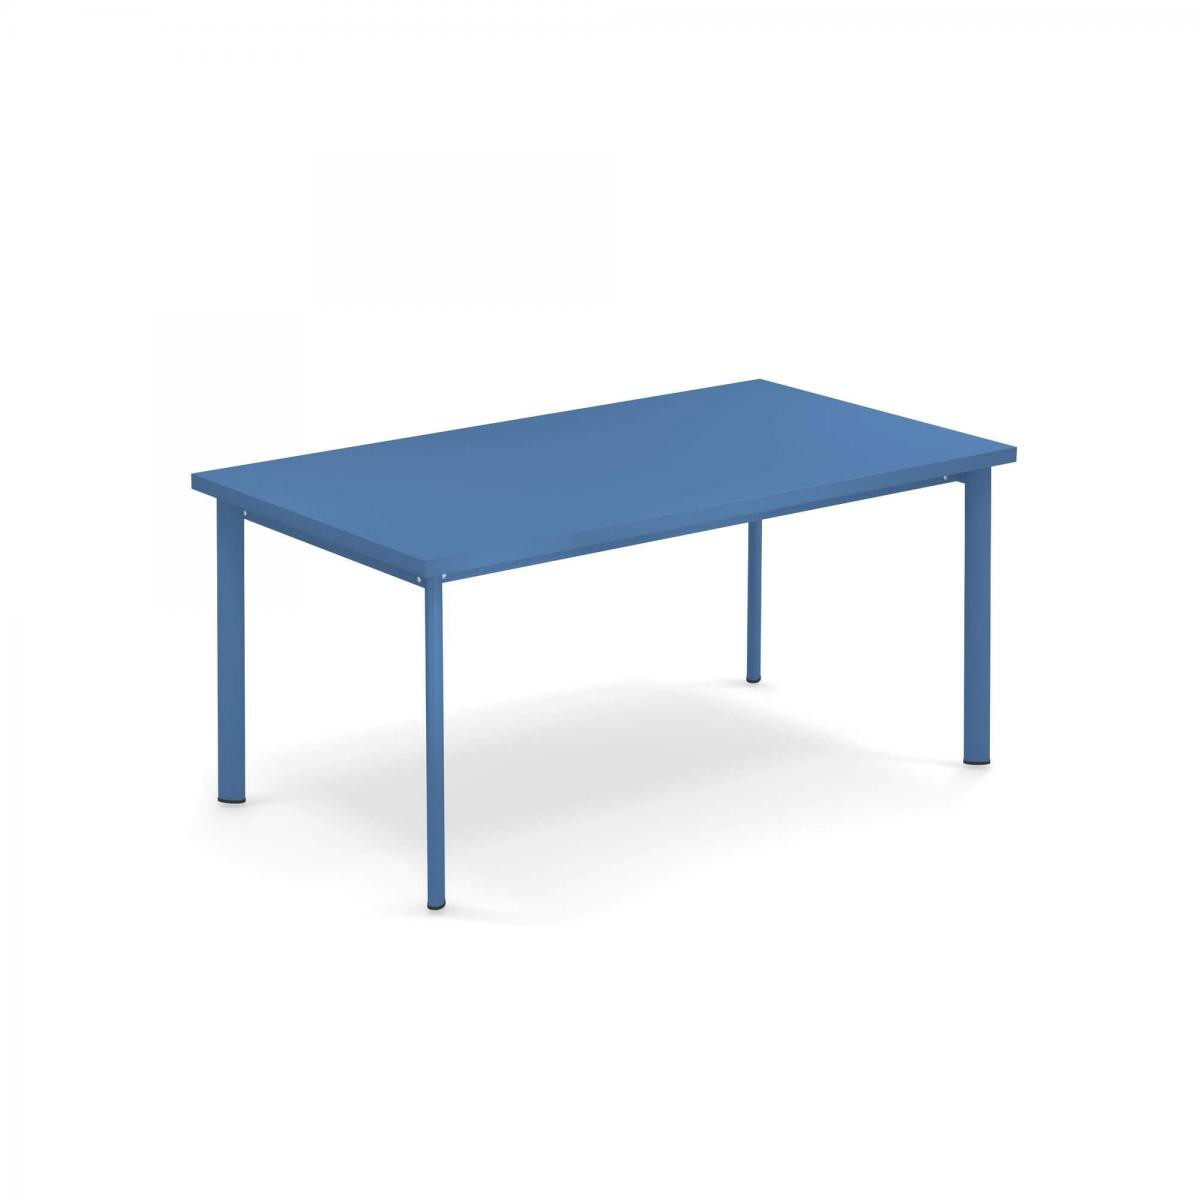 Emu - Table Star - 160 x 90 cm - bleu marine - Tables de jardin